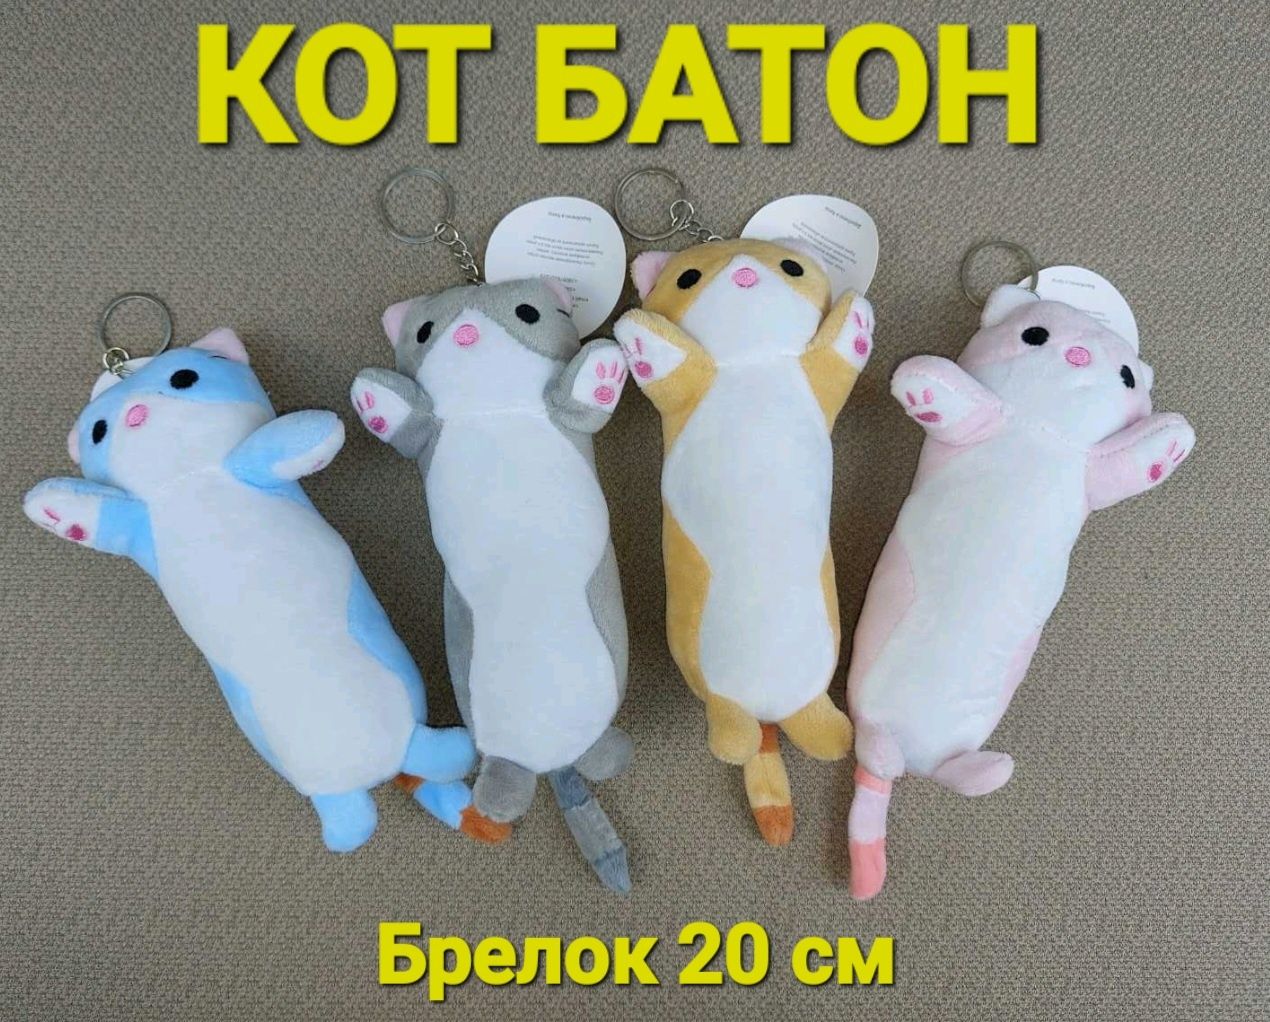 Кот Батон Брелок Размер 20 см Мягкая игрушка